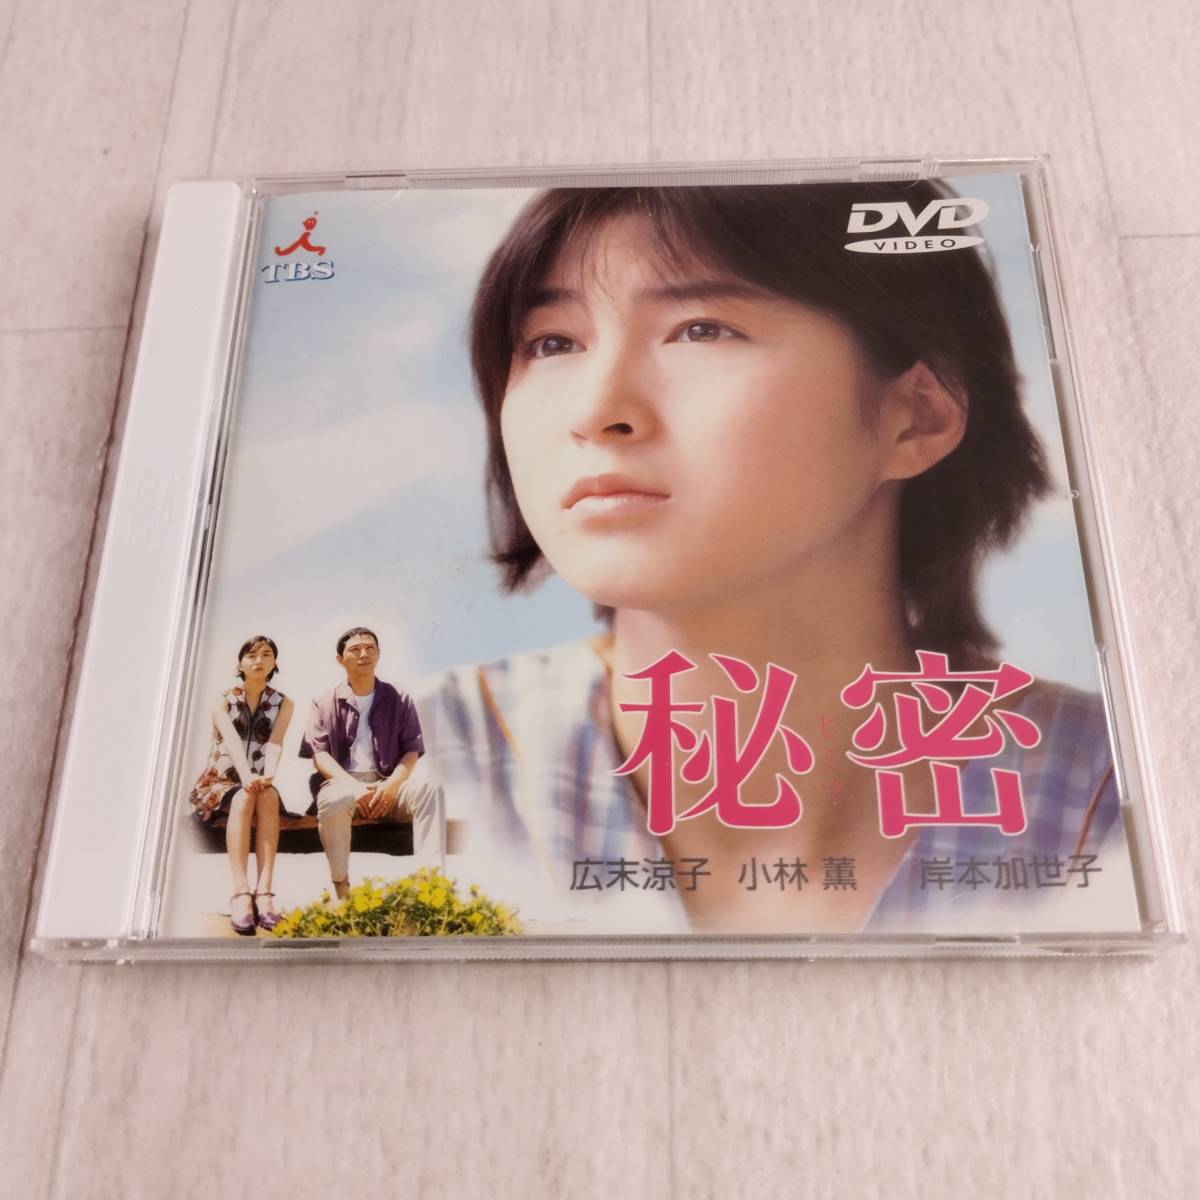 1MD2 DVD 秘密 広末涼子の画像1